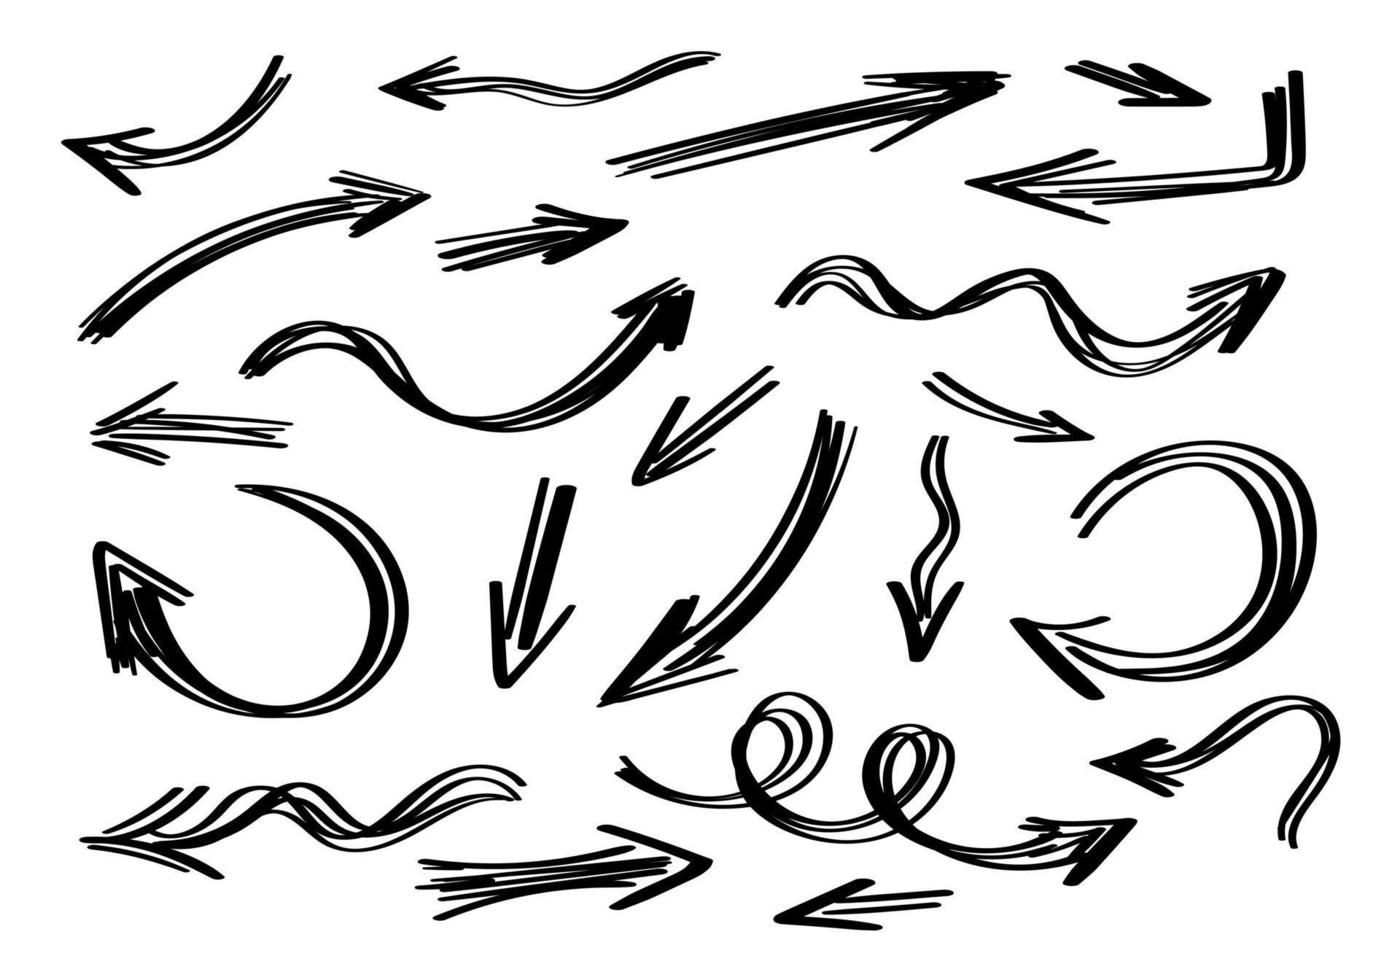 flechas de flecha dibujadas a mano dirección puntero líneas de cursor garabato garabato arte de línea negra conjunto de bocetos ilustración vectorial vector